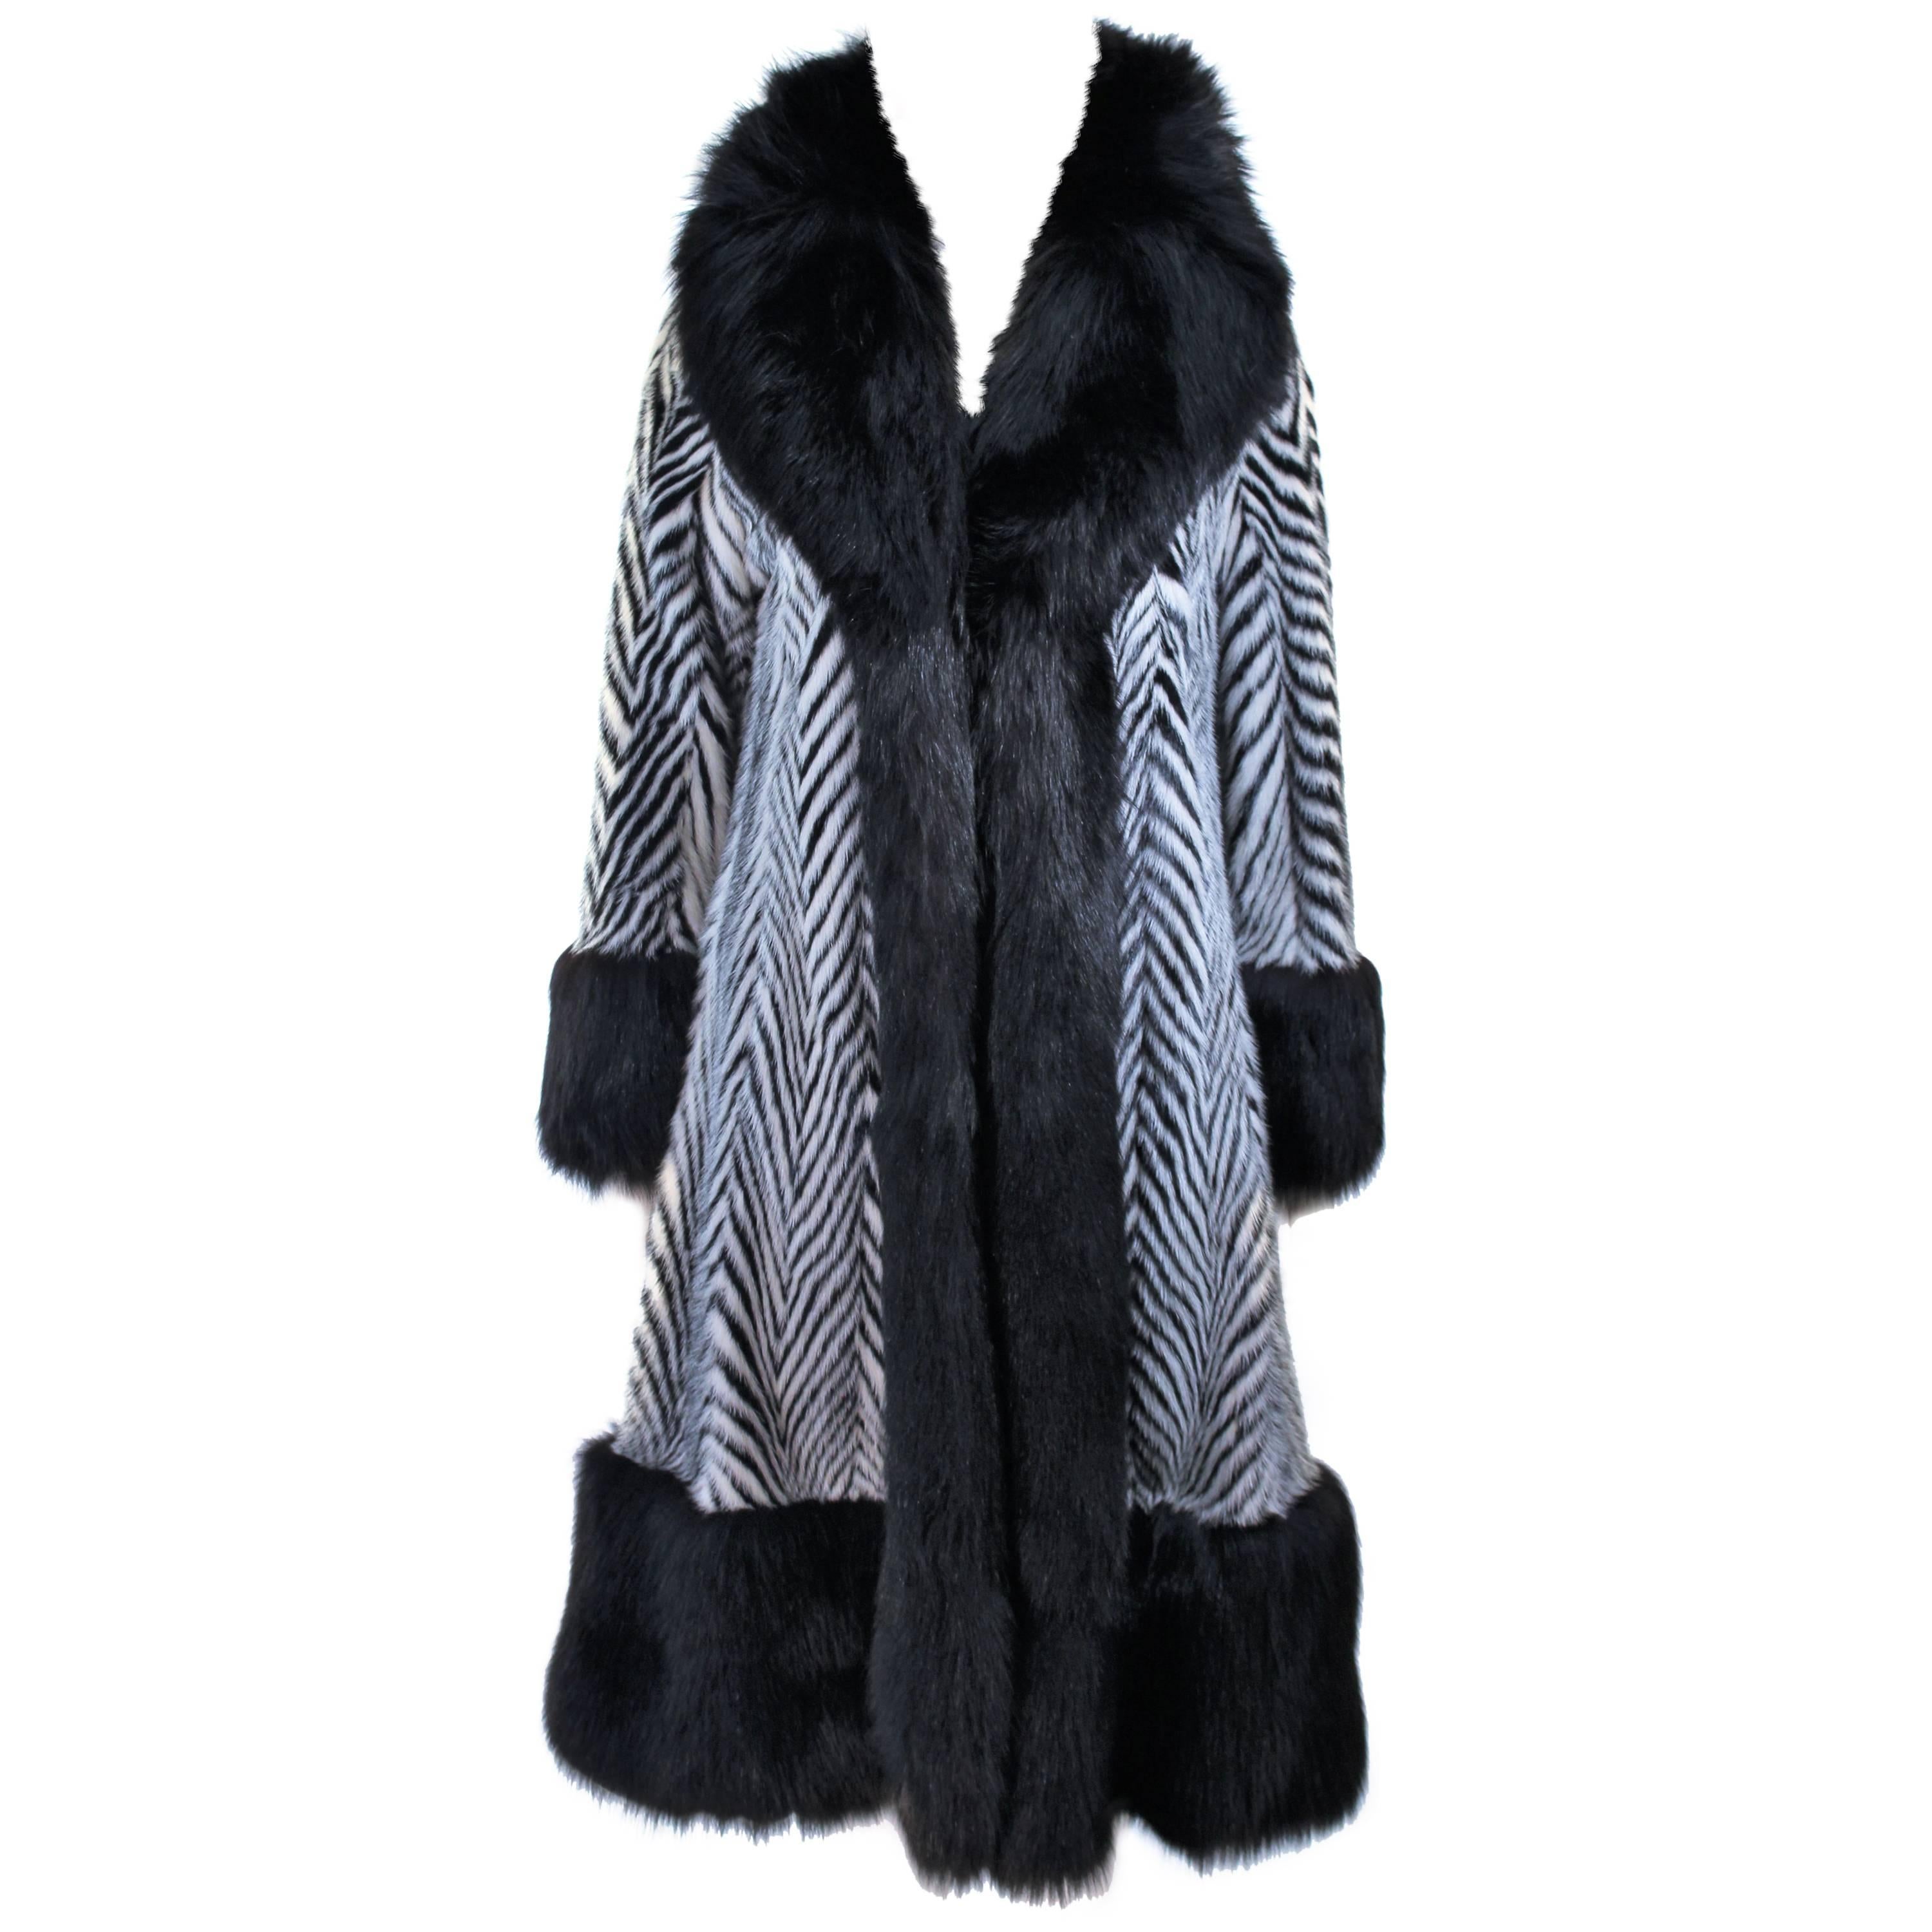 ZACCARIA FURS Black and White Mink Chevron Fur Coat with Fox Trim Size ...